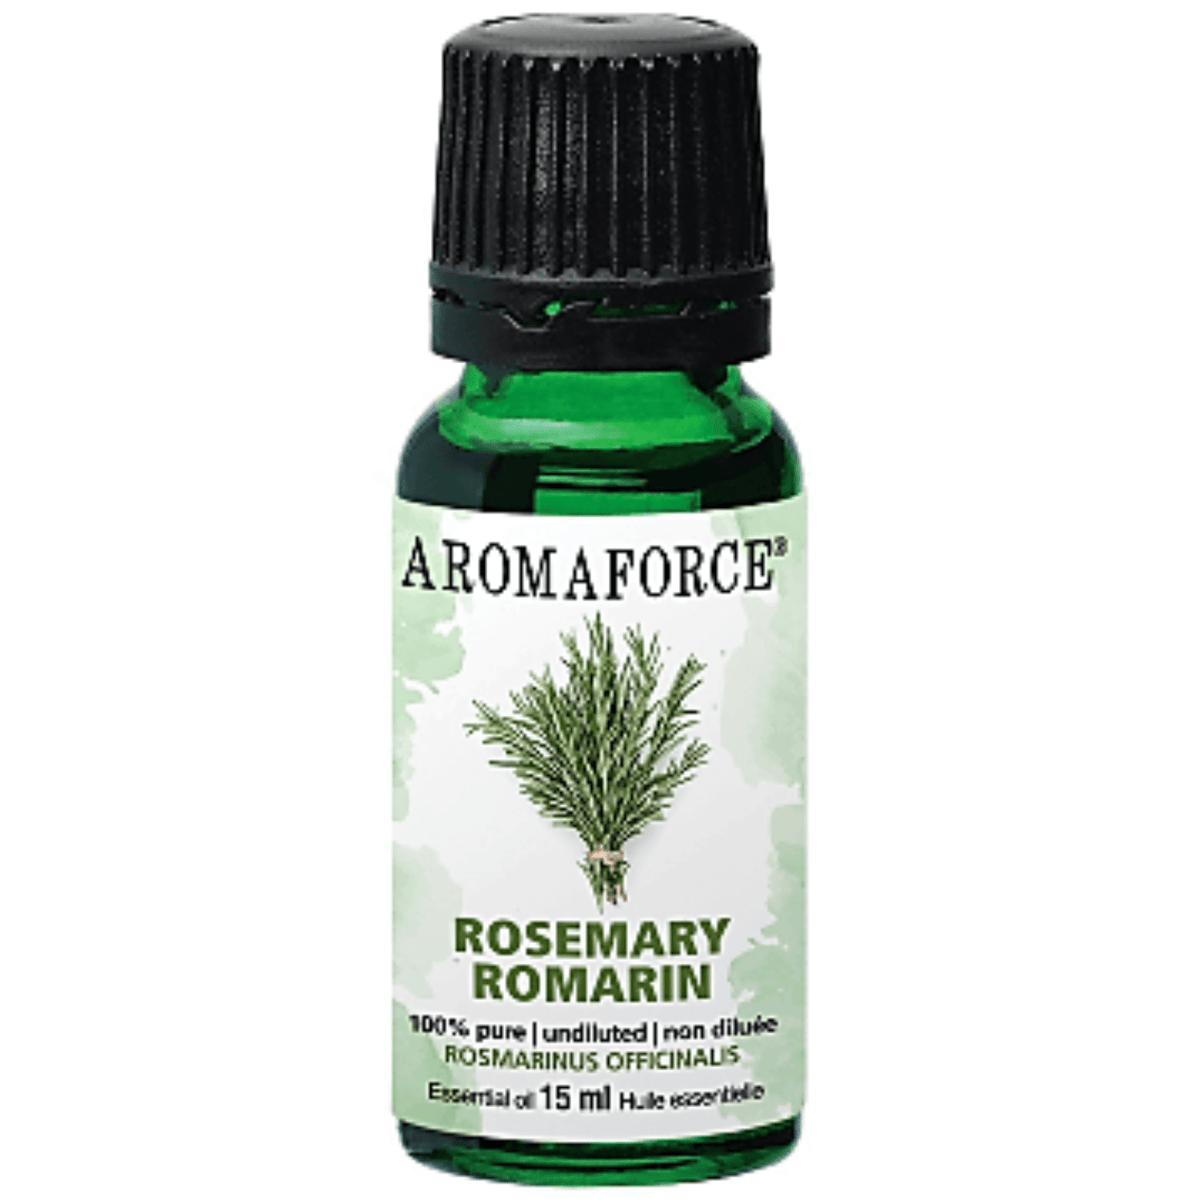 Aromaforce Rosemary Essential Oil 15mL Essential Oils at Village Vitamin Store